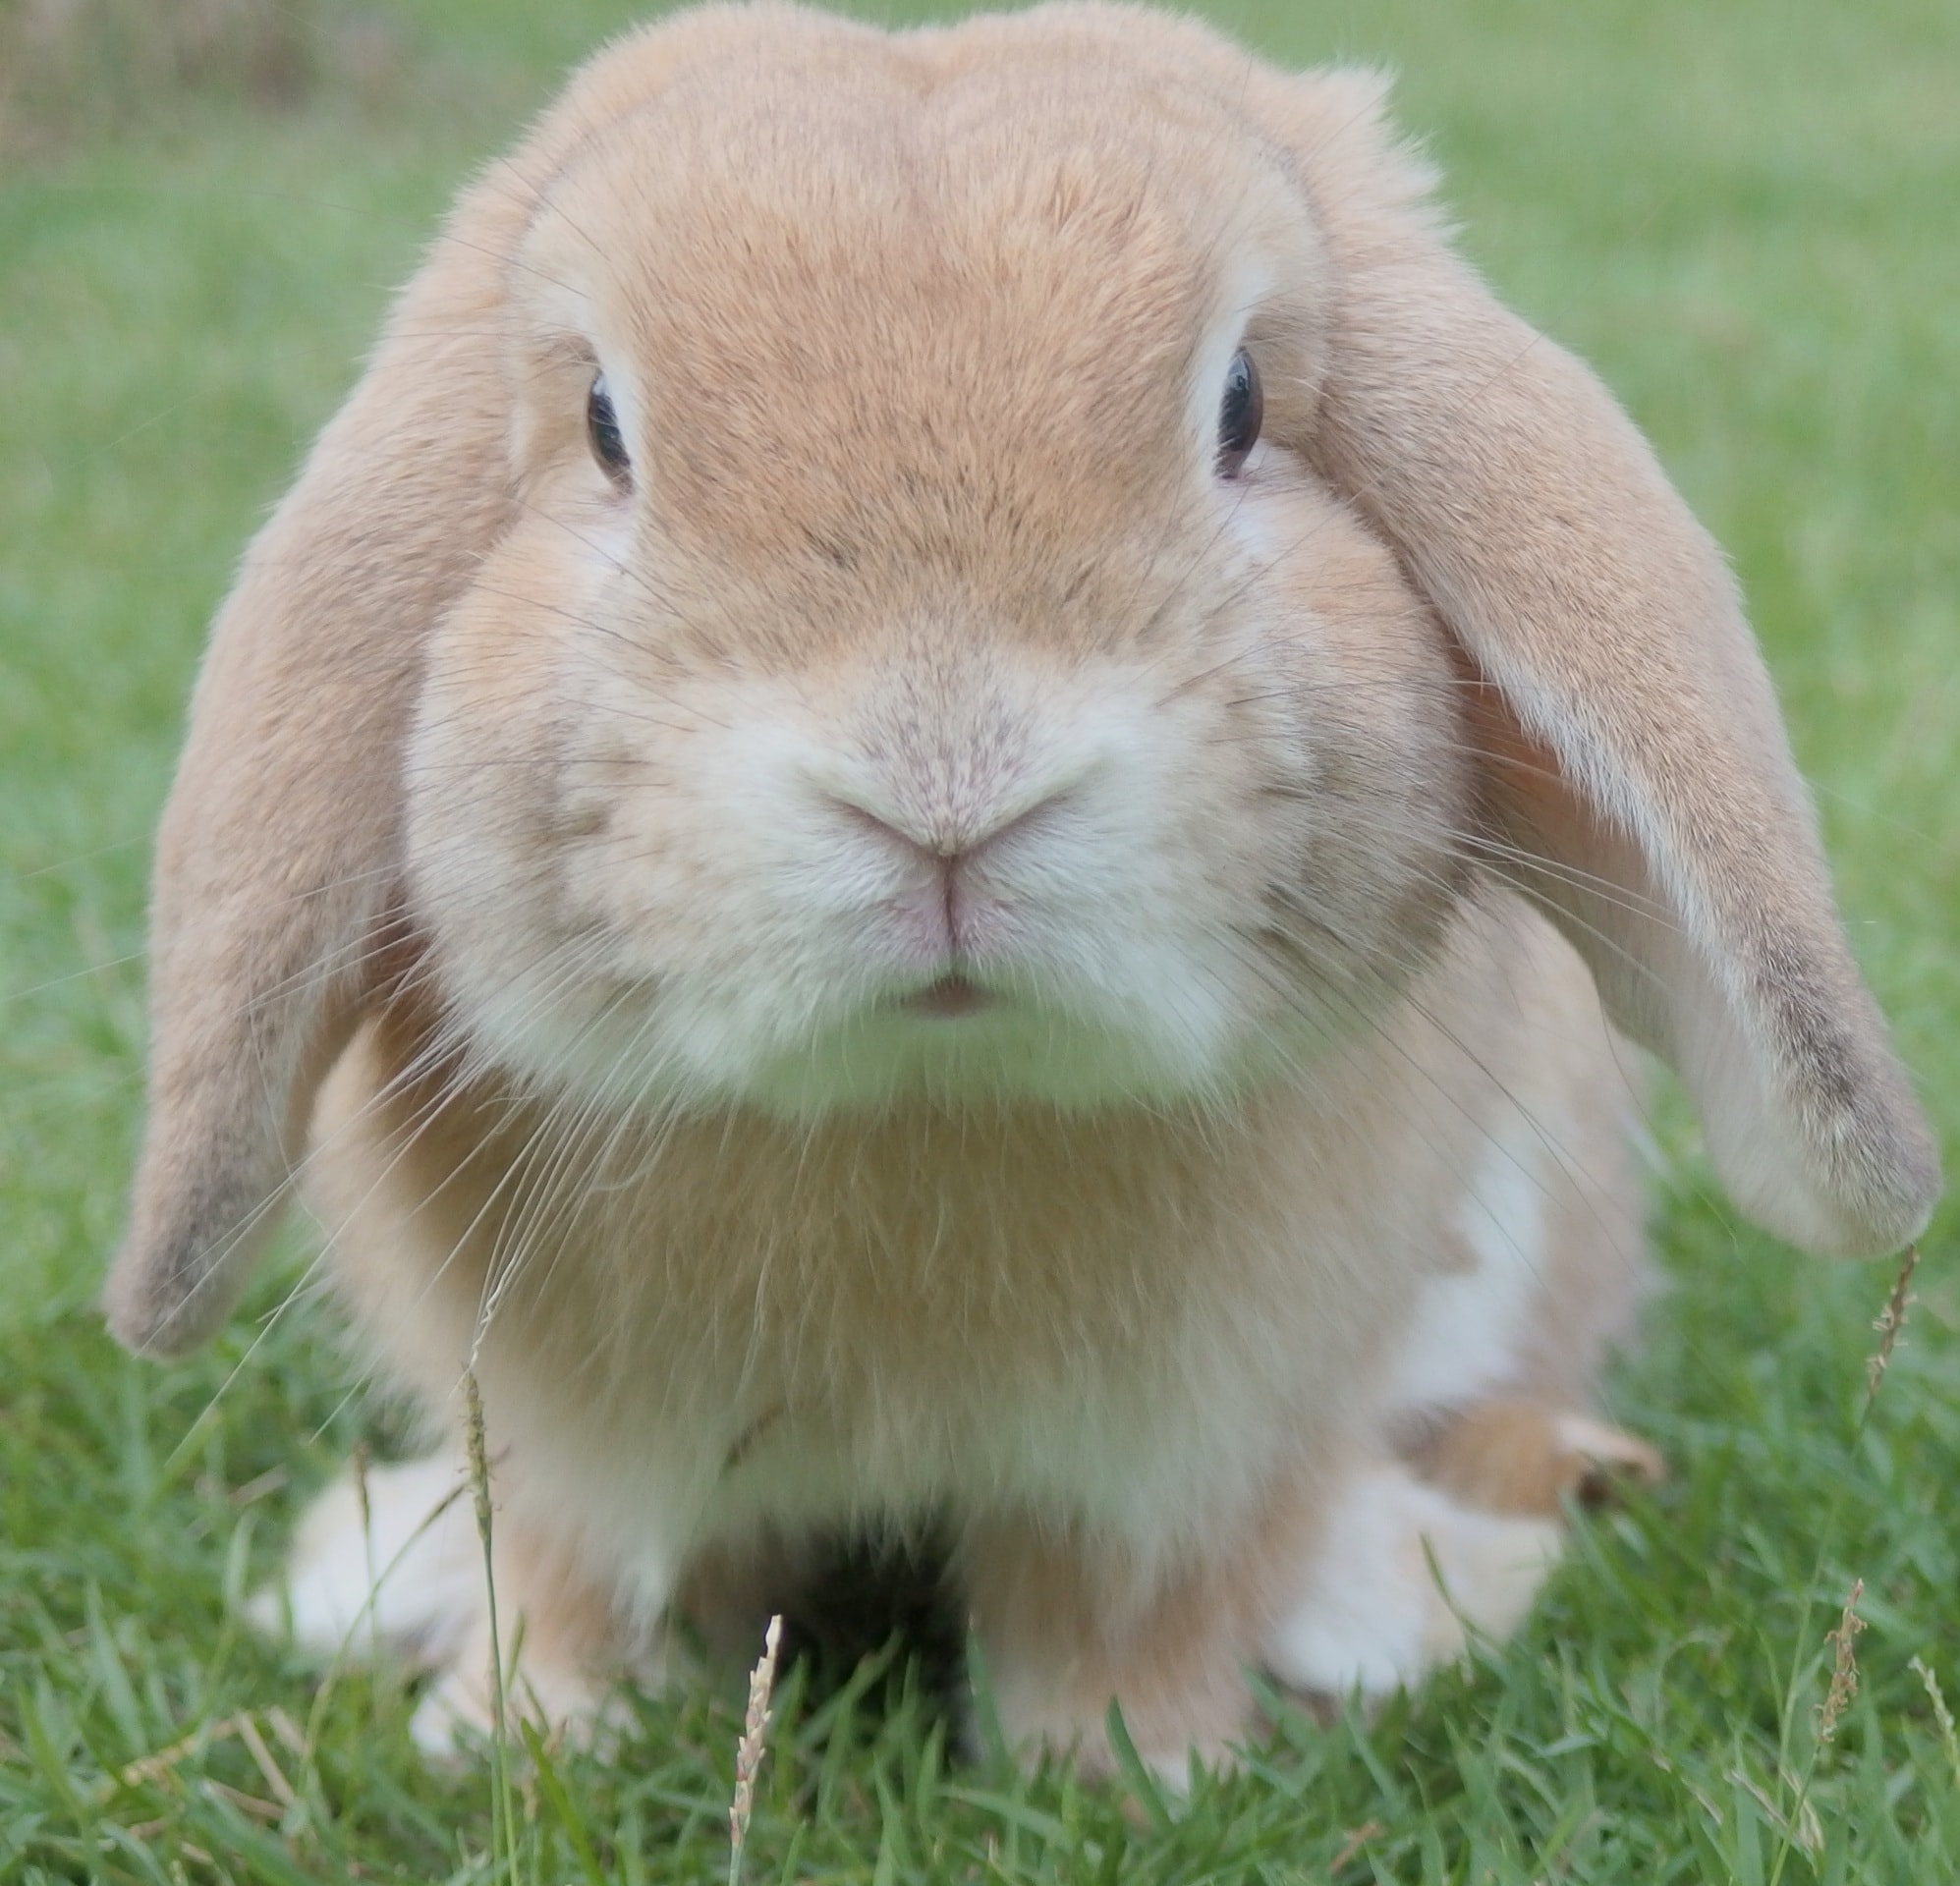 Is My Rabbit Sad, Lonely Or Depressed?